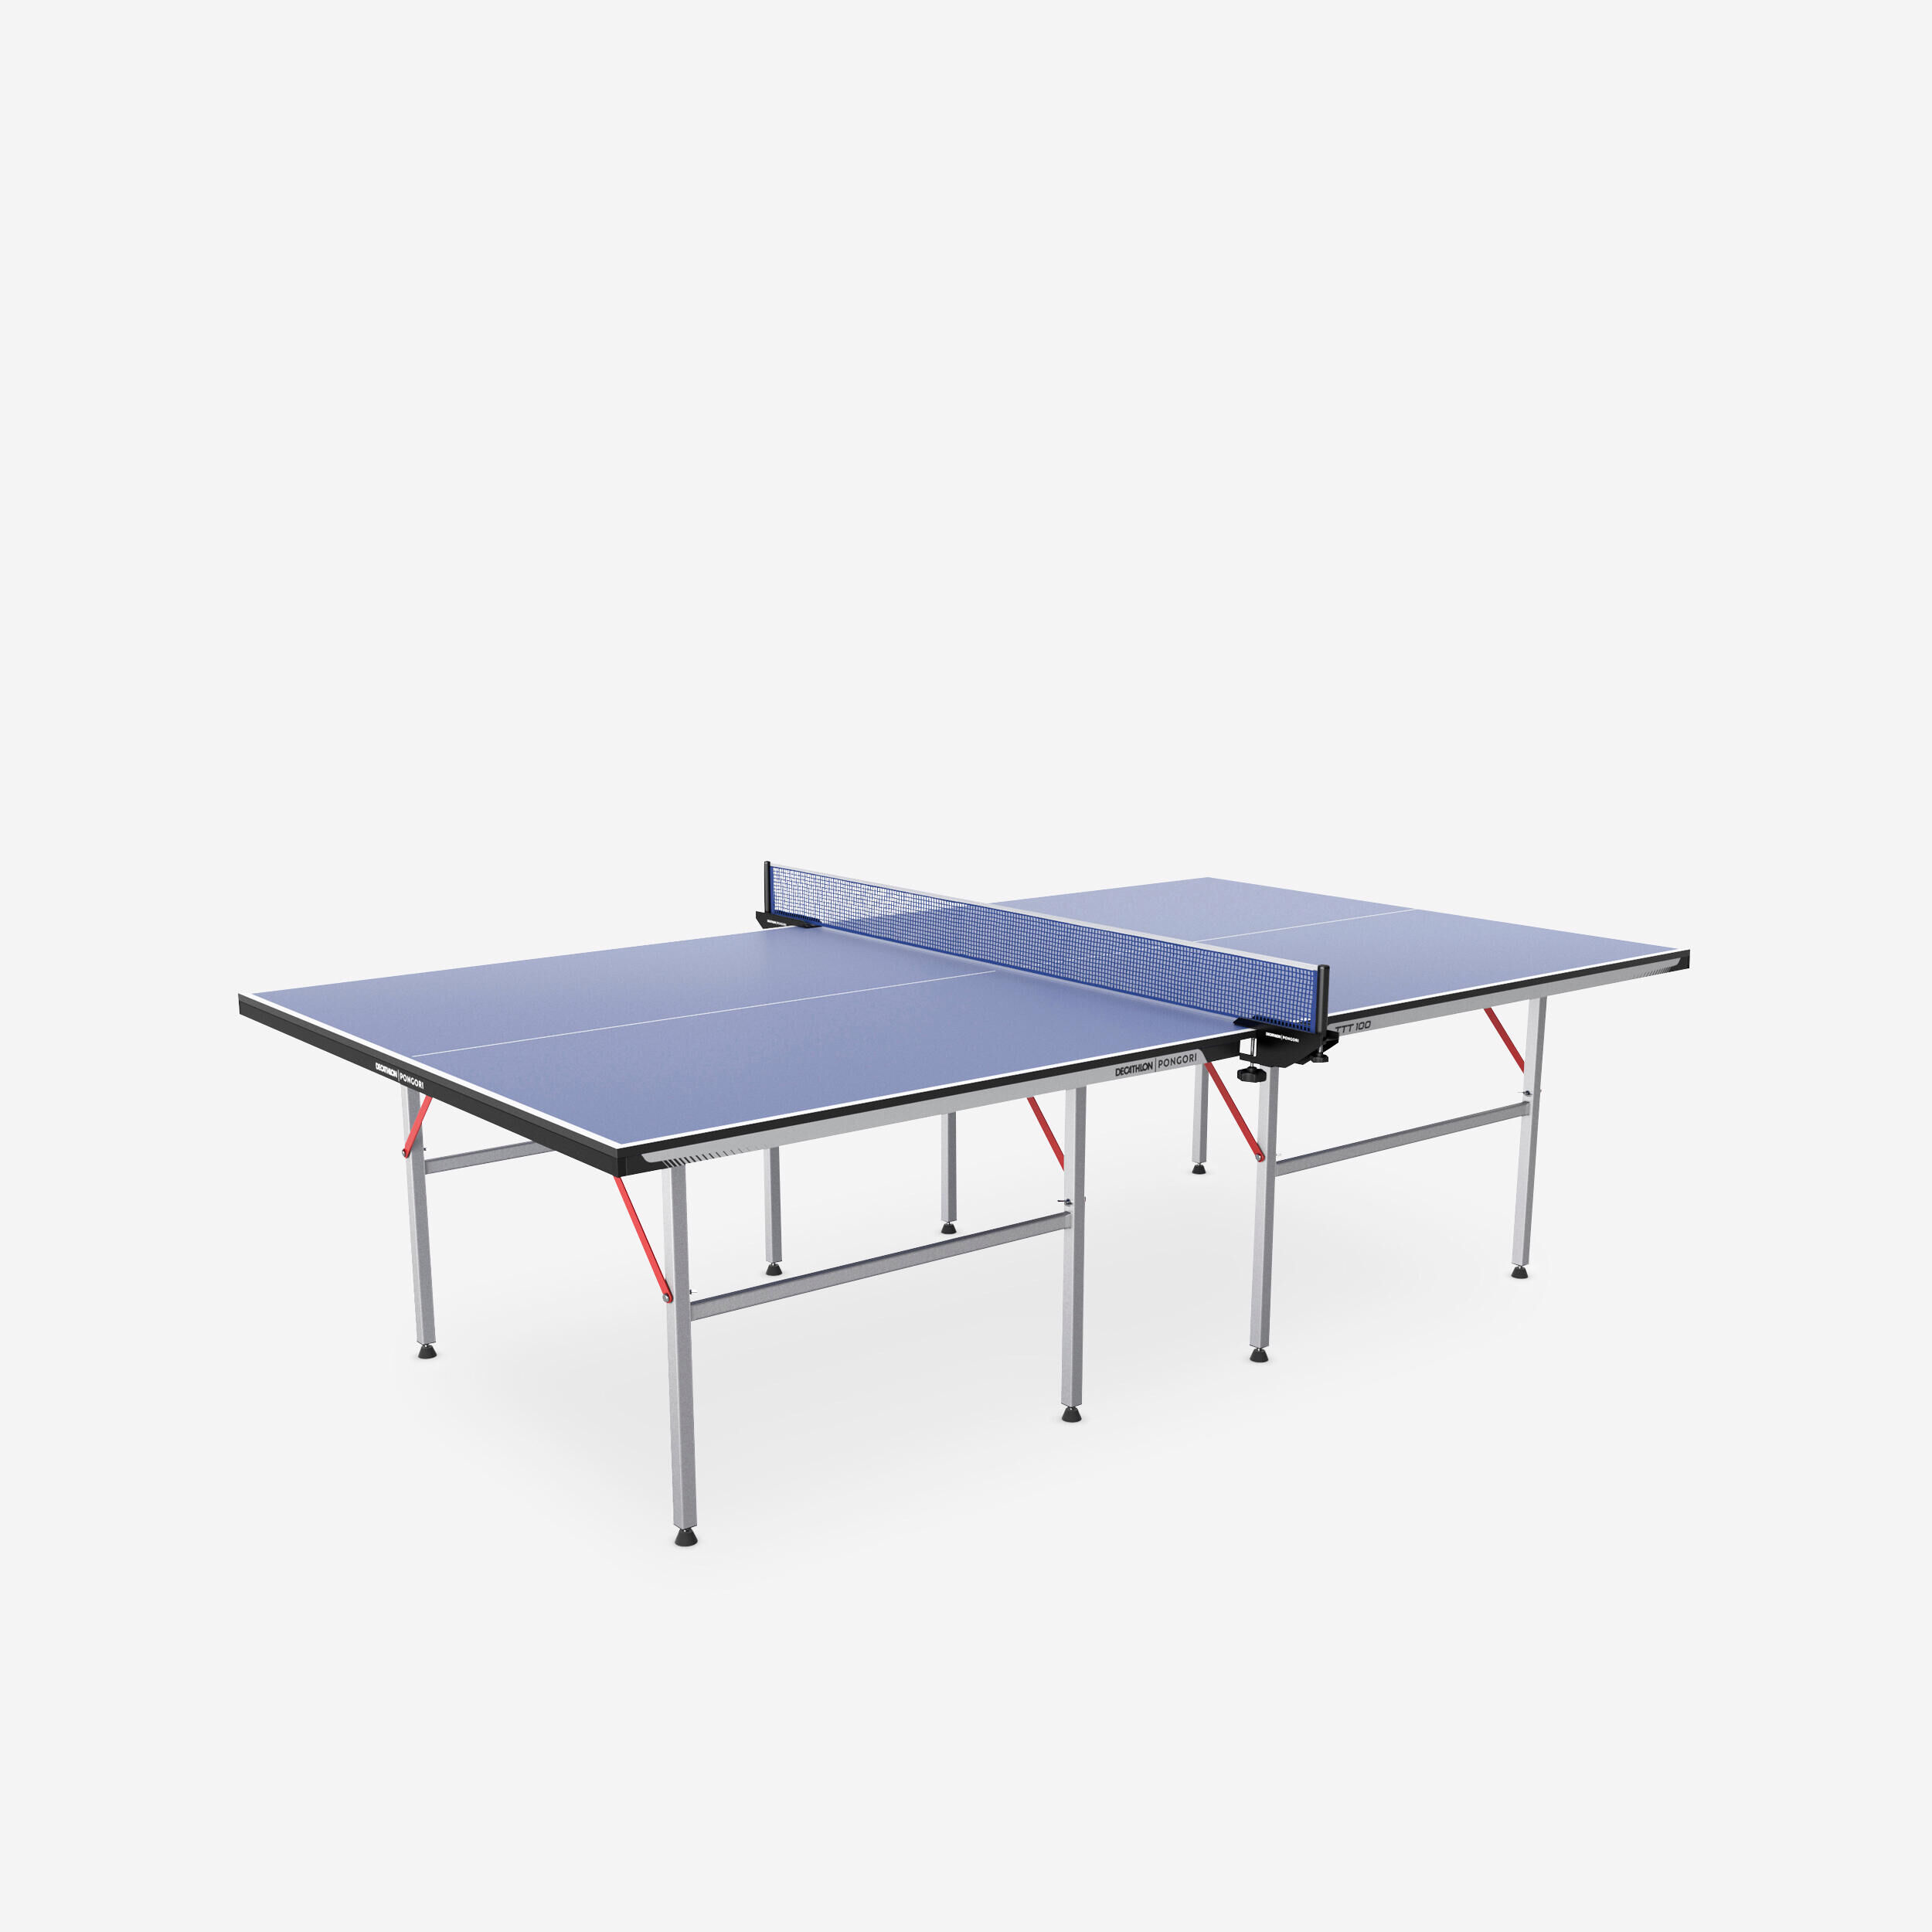 PONGORI Table Tennis Table TTT 100